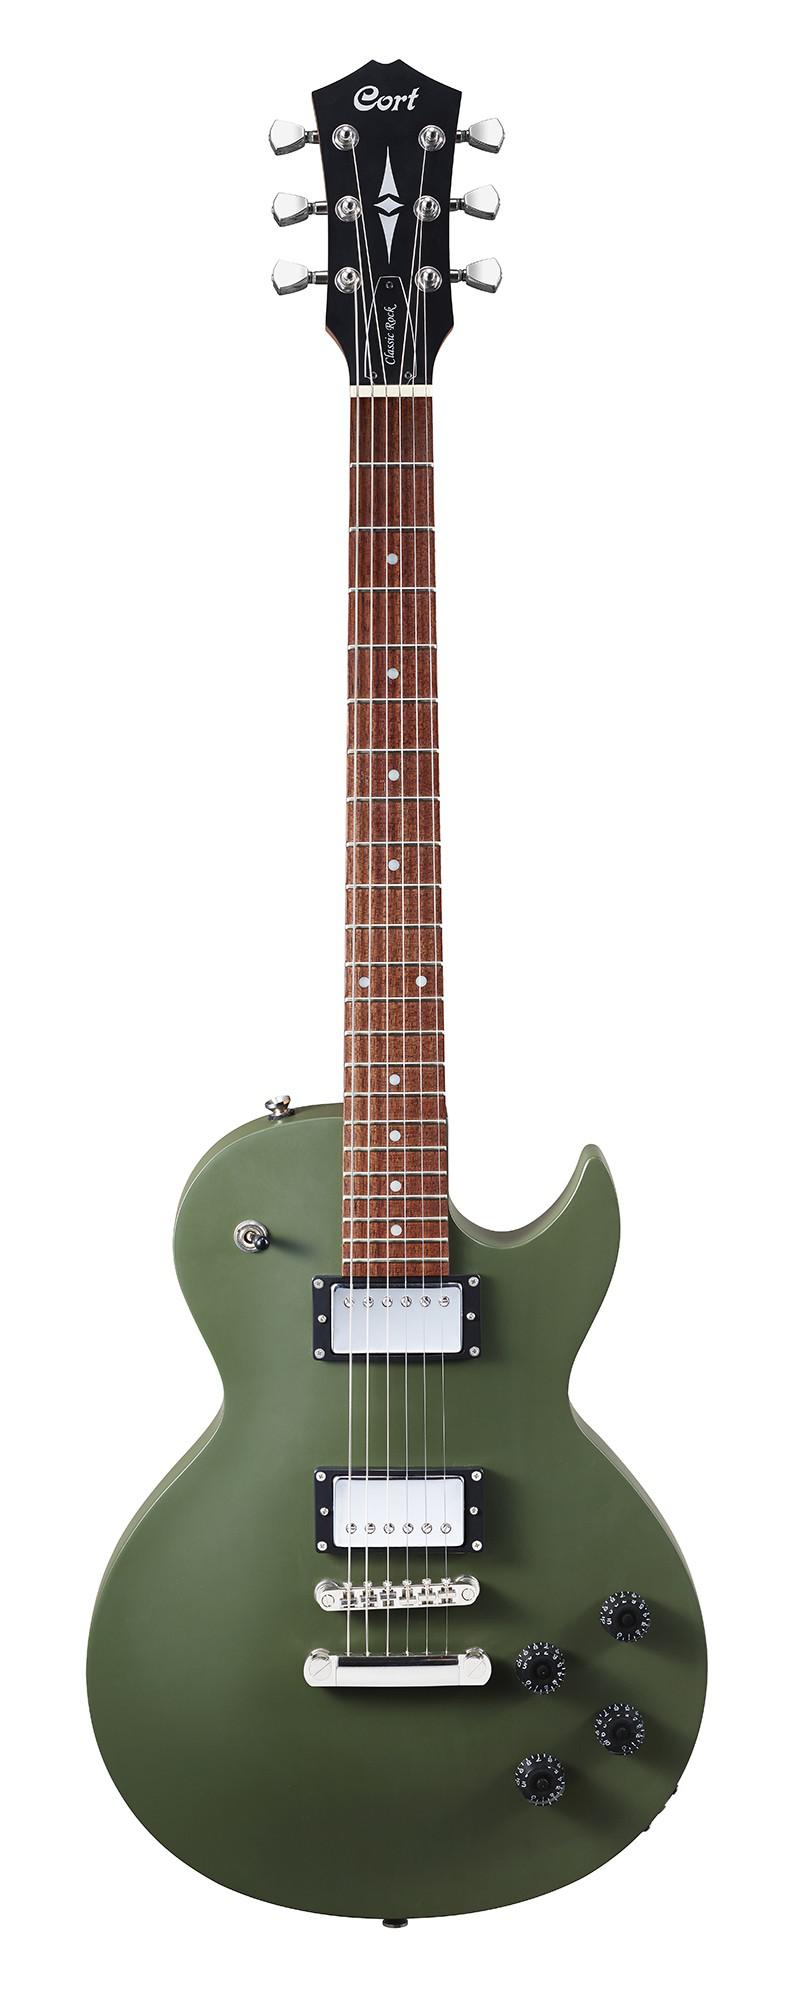 Cort - Guitarra Eléctrica CR, Color: Verde Olivo Mate Mod.CR150-ODS_22